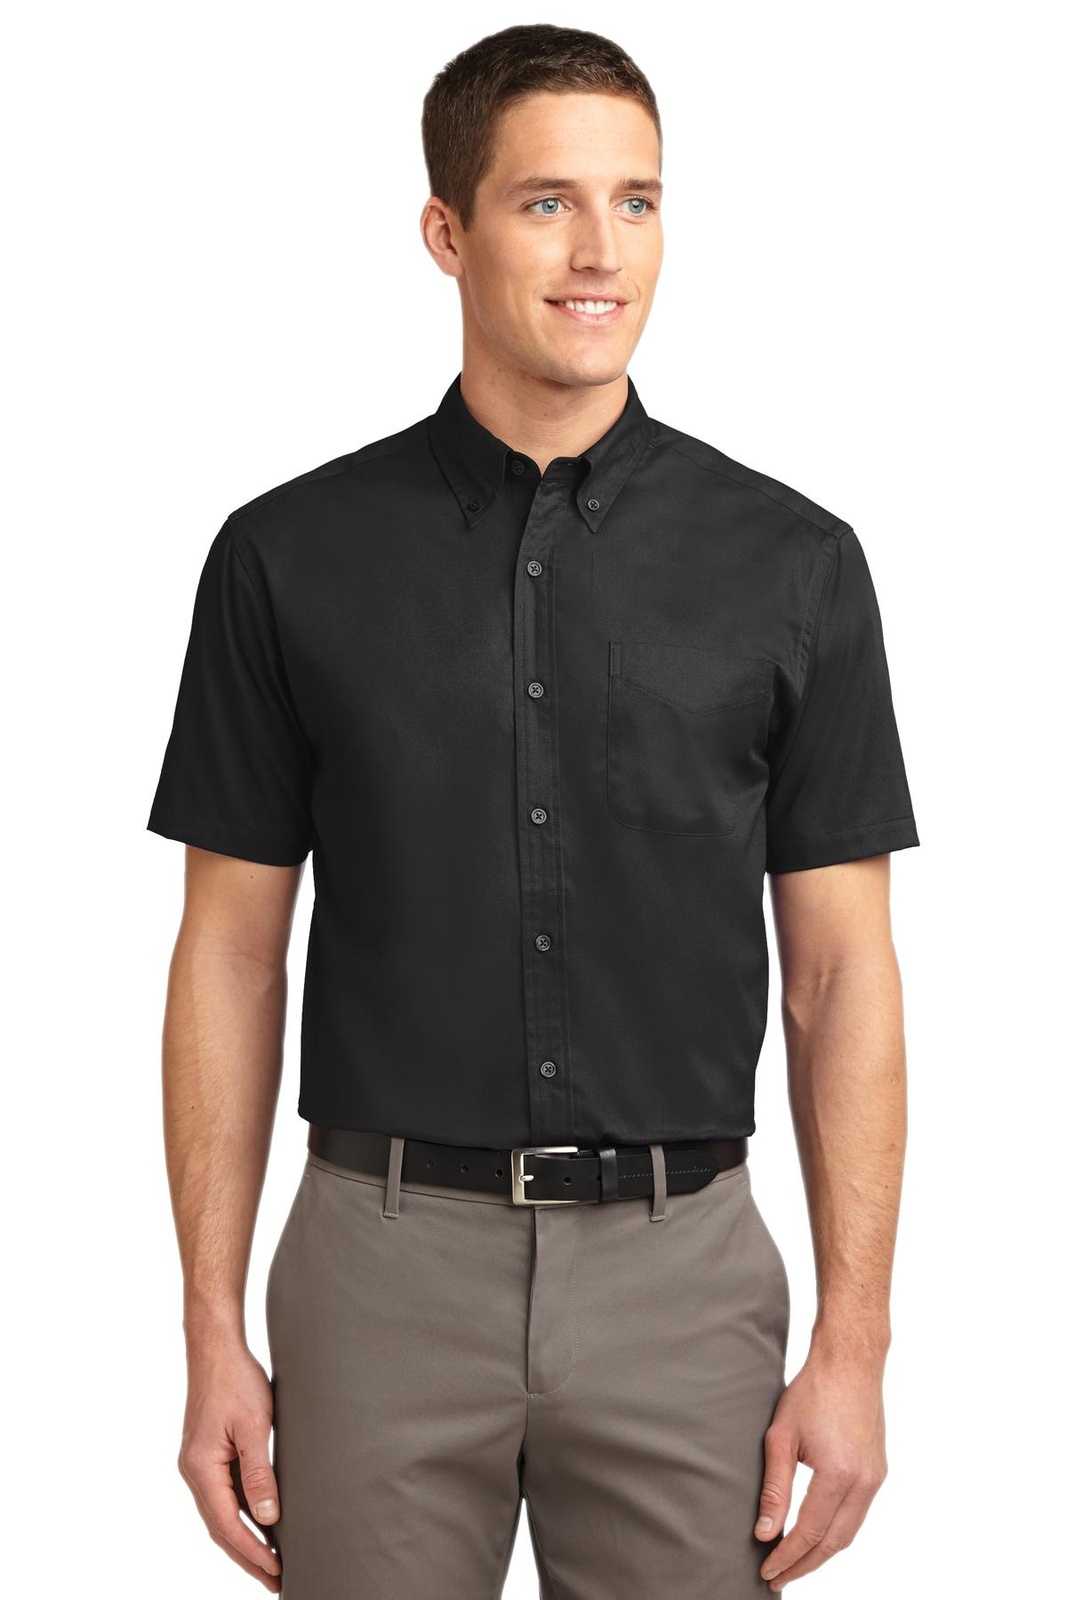 Port Authority S508 Short Sleeve Easy Care Shirt - Black Light Stone - HIT a Double - 1